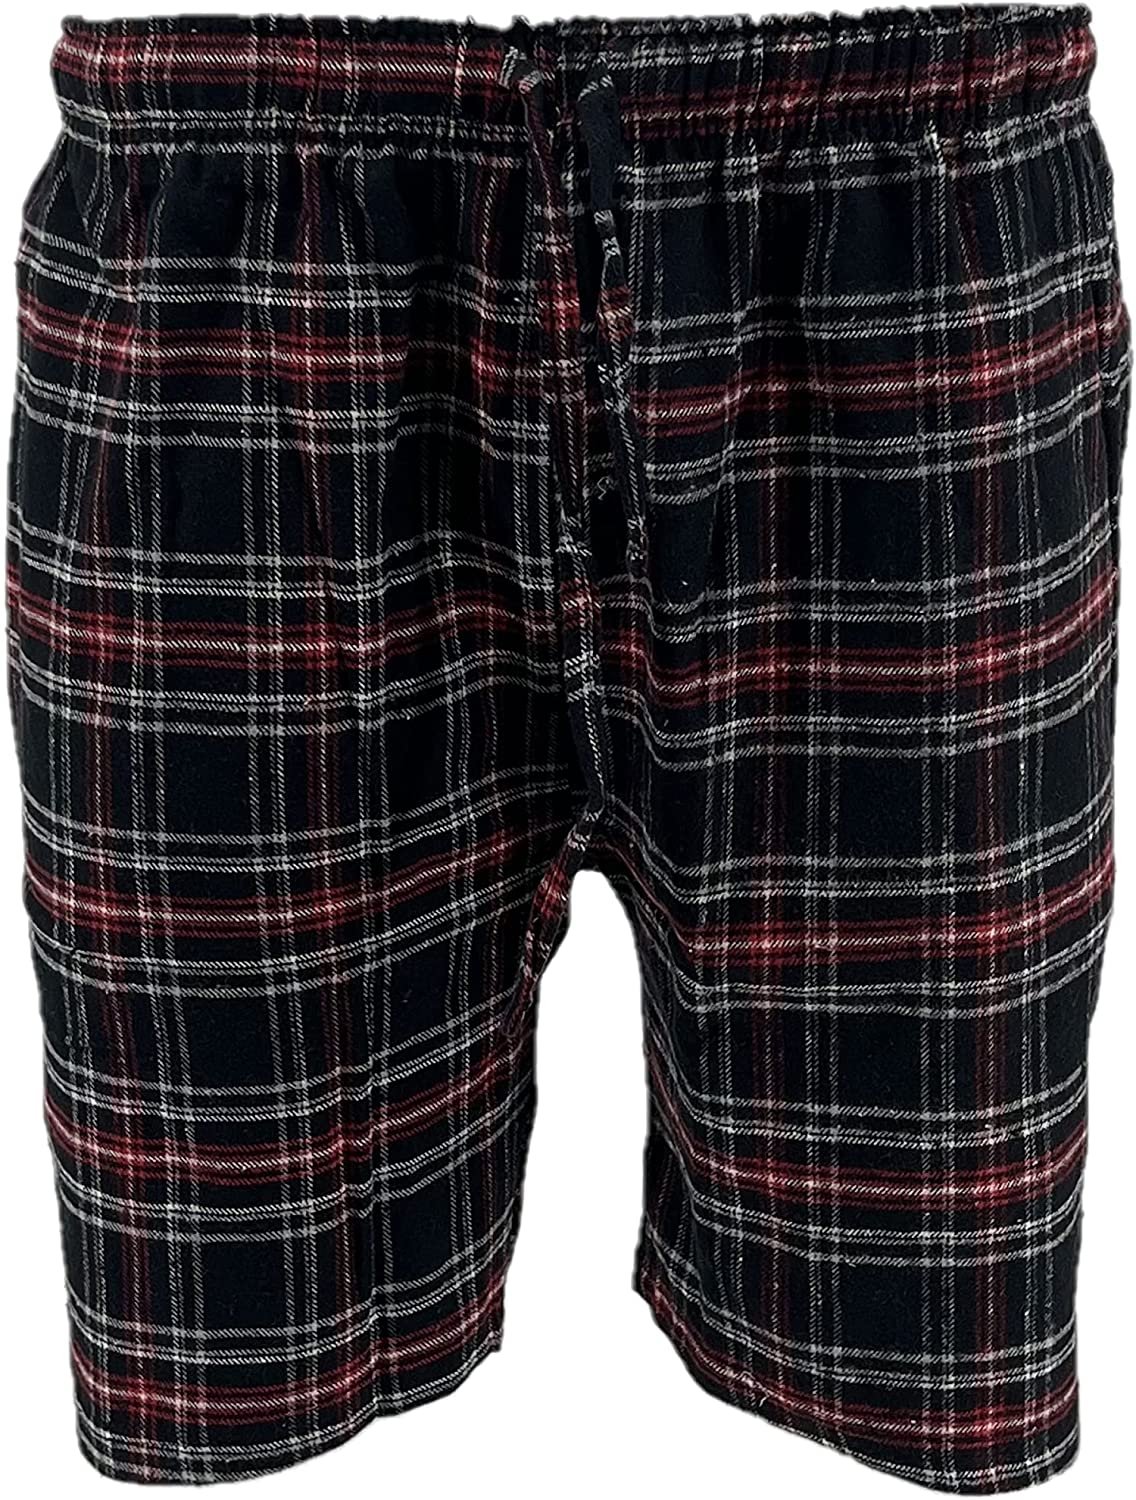 Ritzy Men's Sleep Short Pajama 100% Cotton Woven Plaid ComfortSoft B&B Checks 